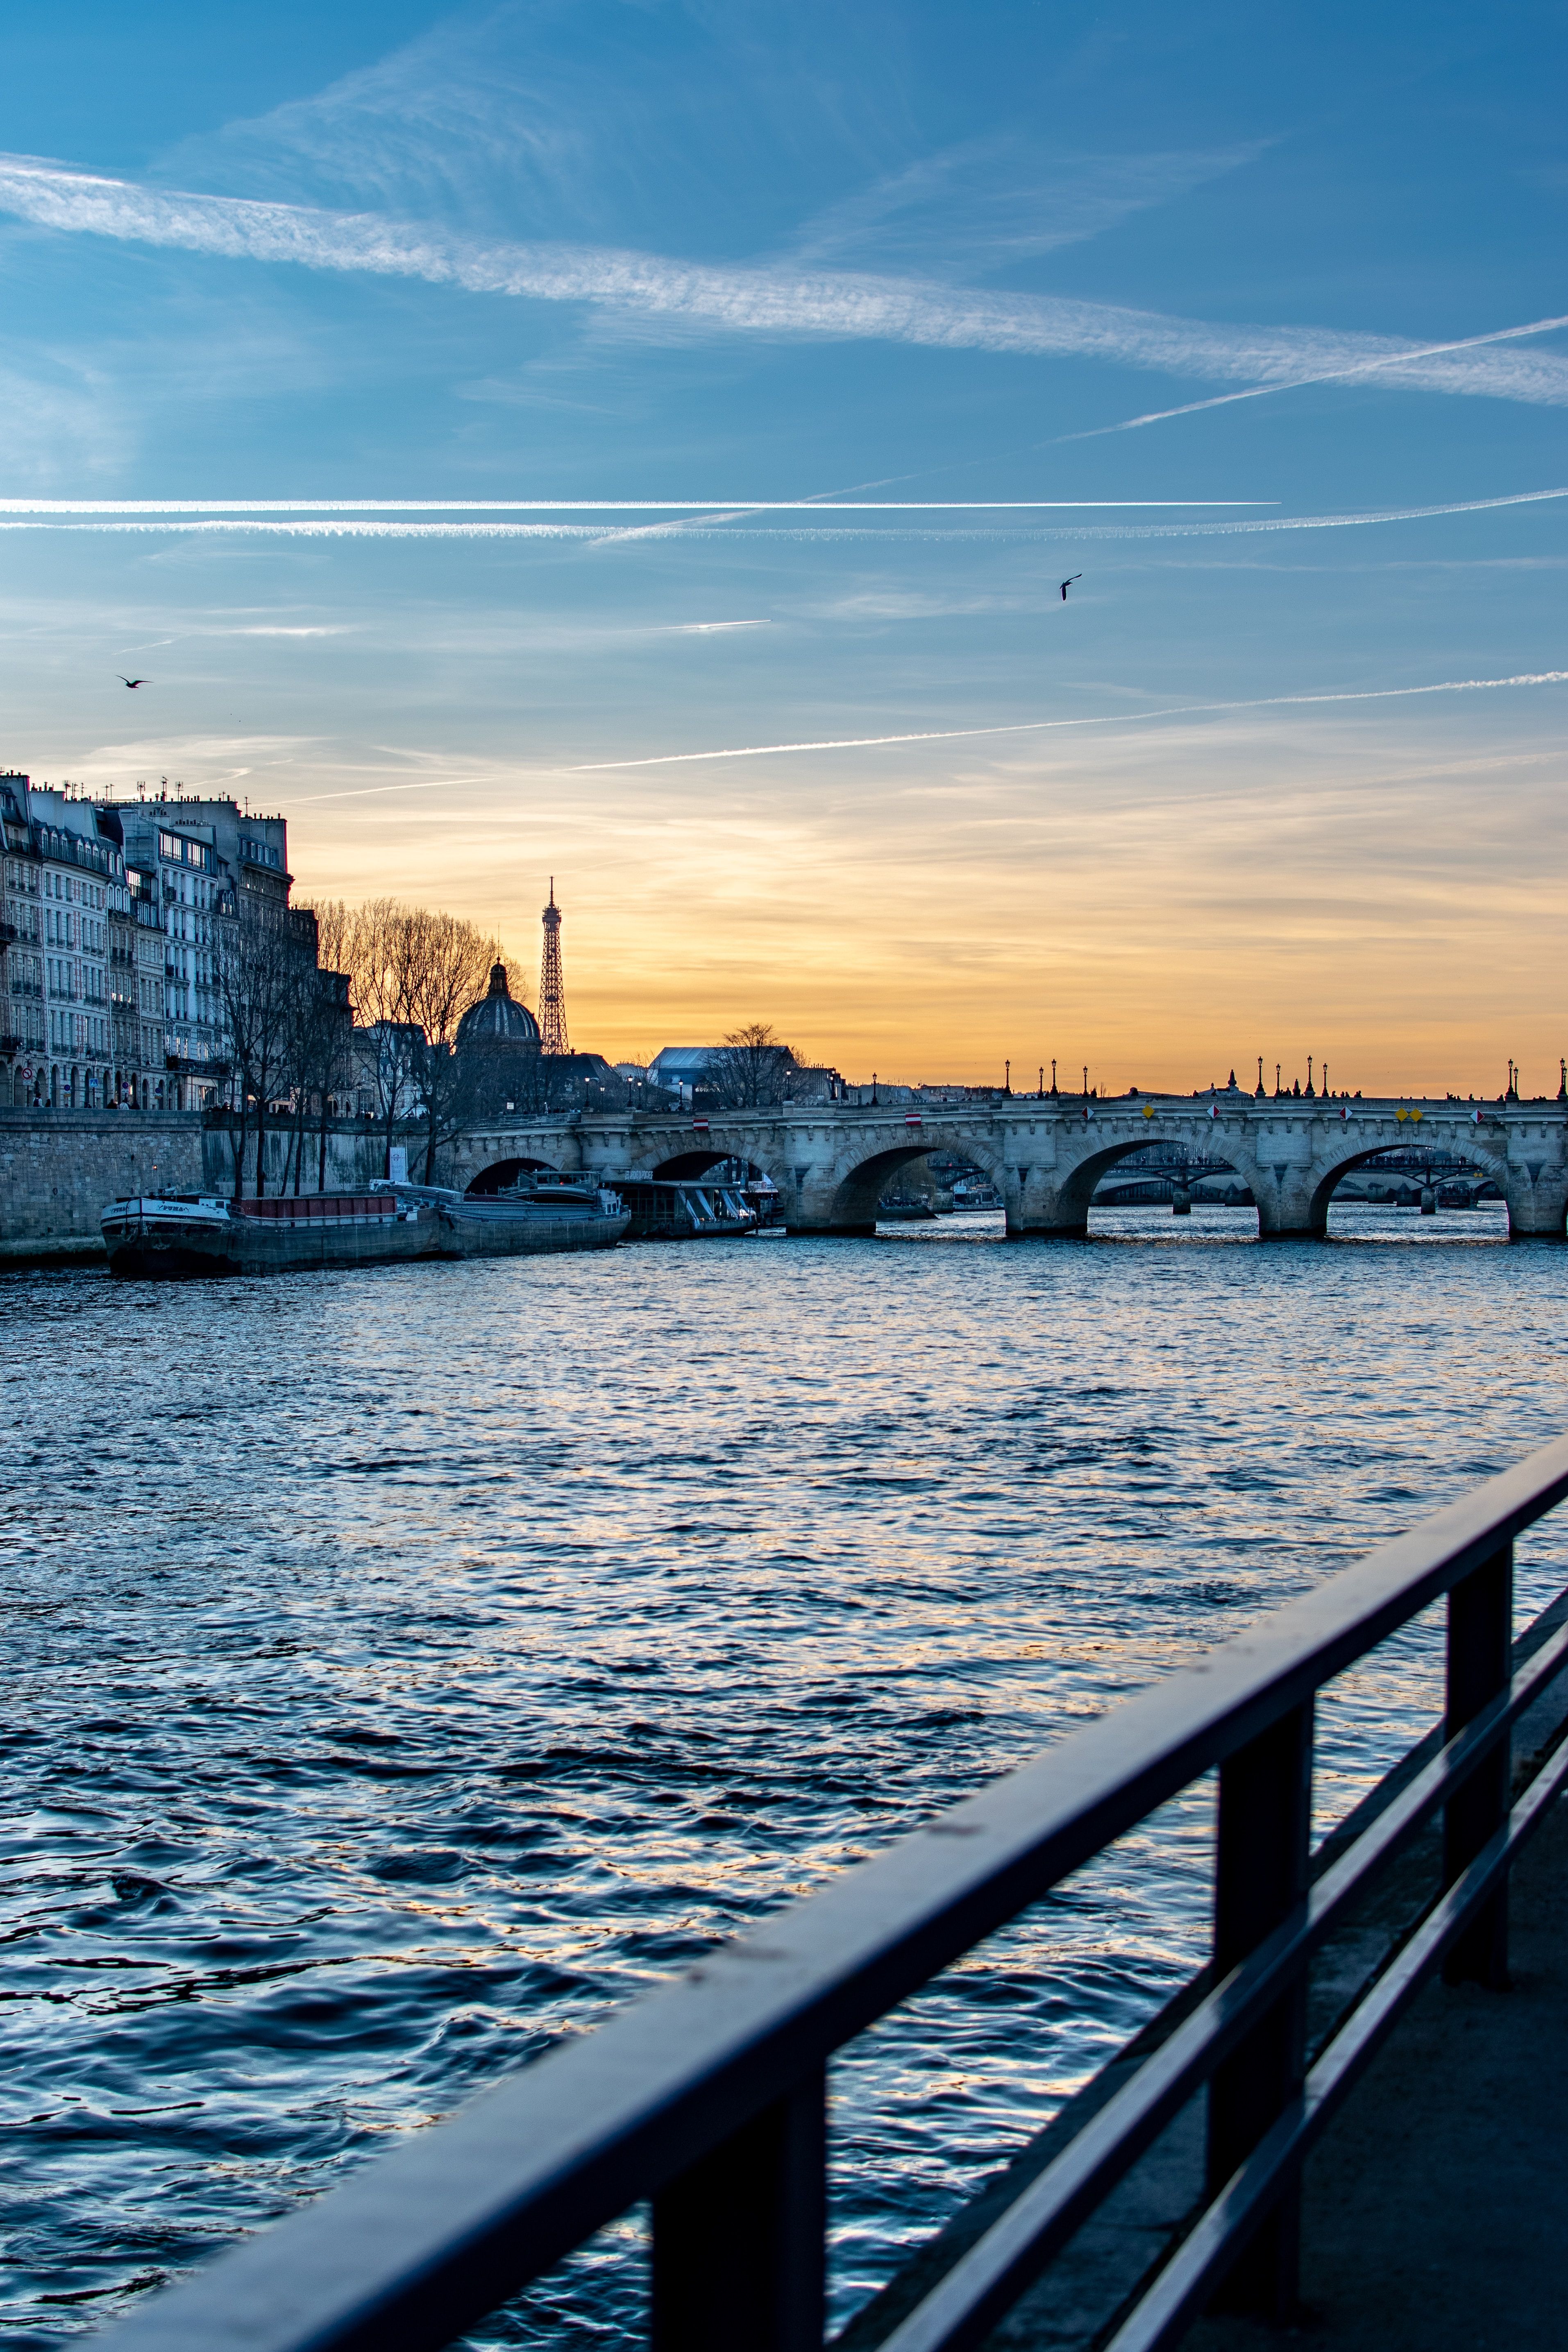 Seine River, Paris at sunset